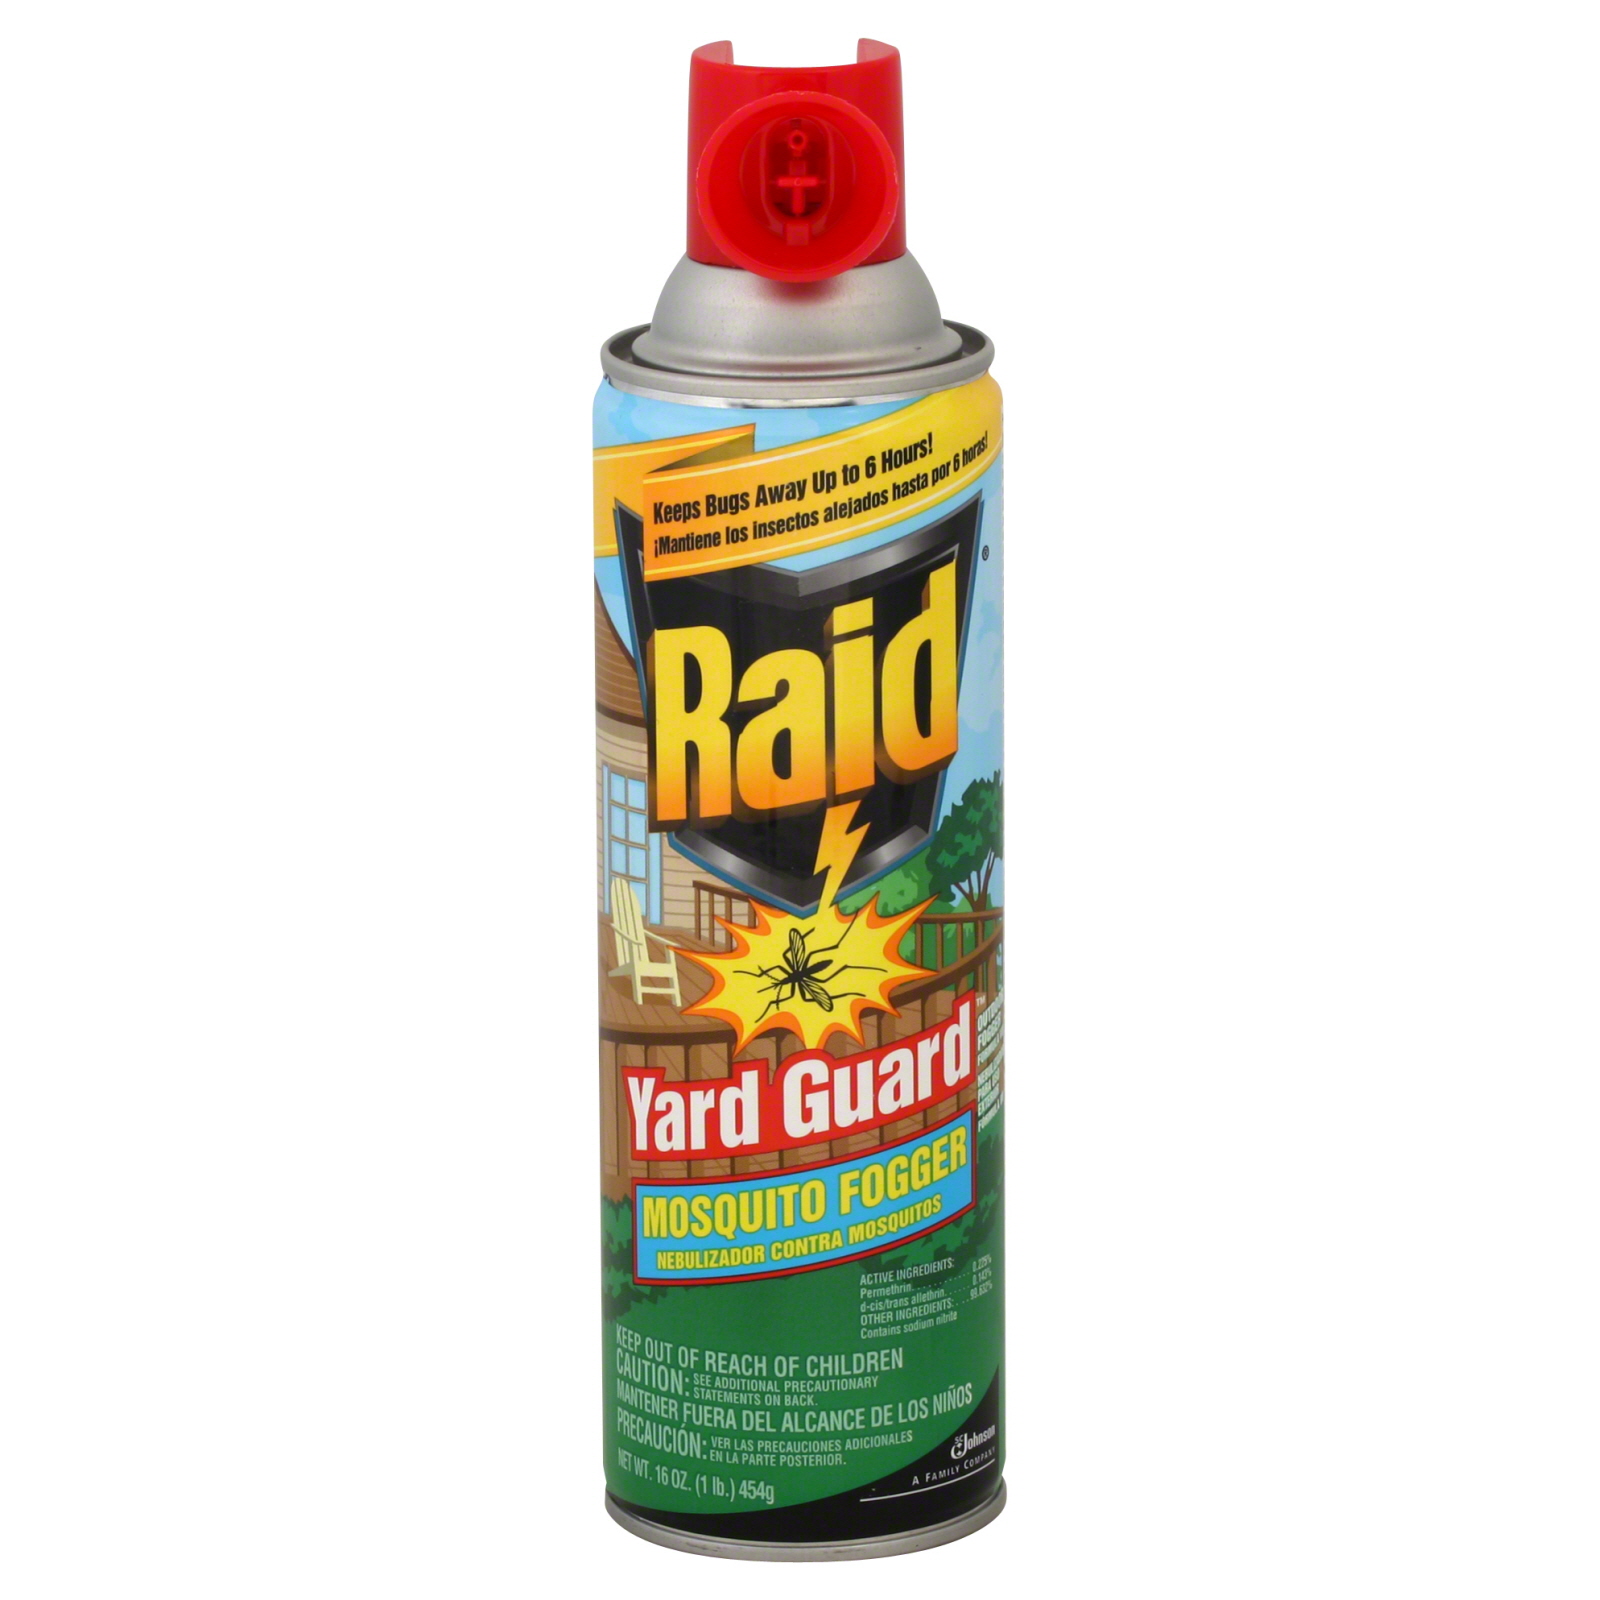 Raid Yard Guard Mosquito Fogger, 16 oz (1 lb) 454 g